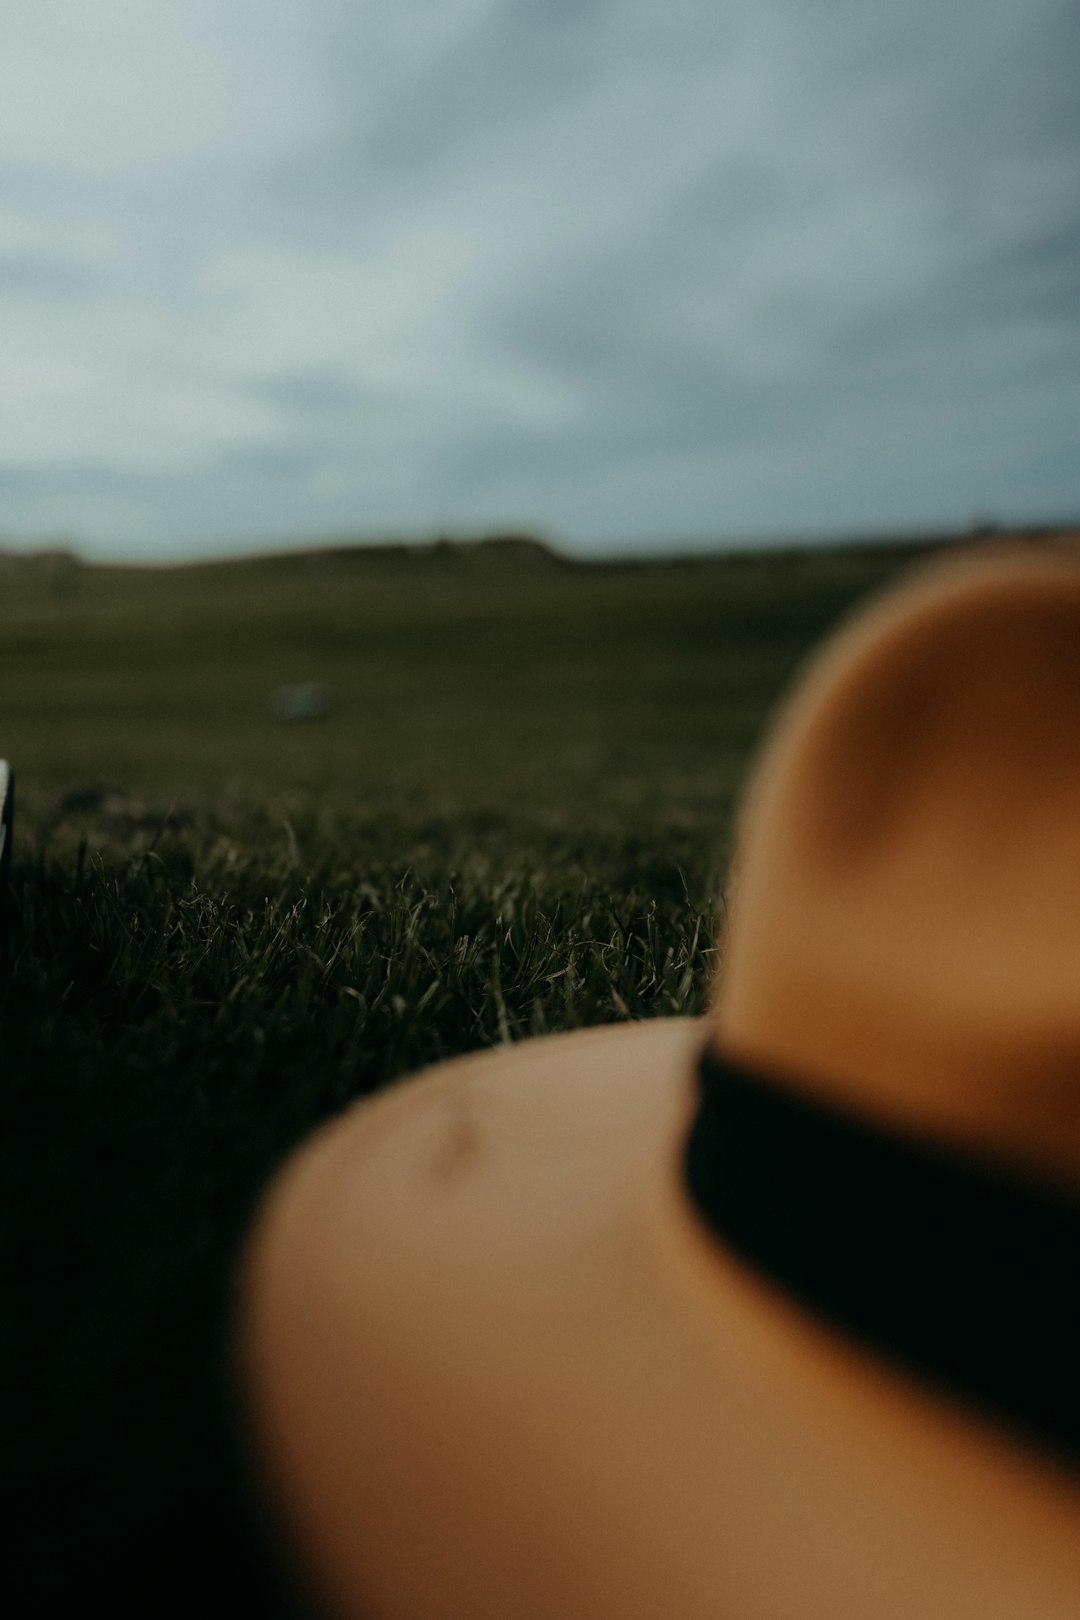 brown fedora hat on green grass field during daytime